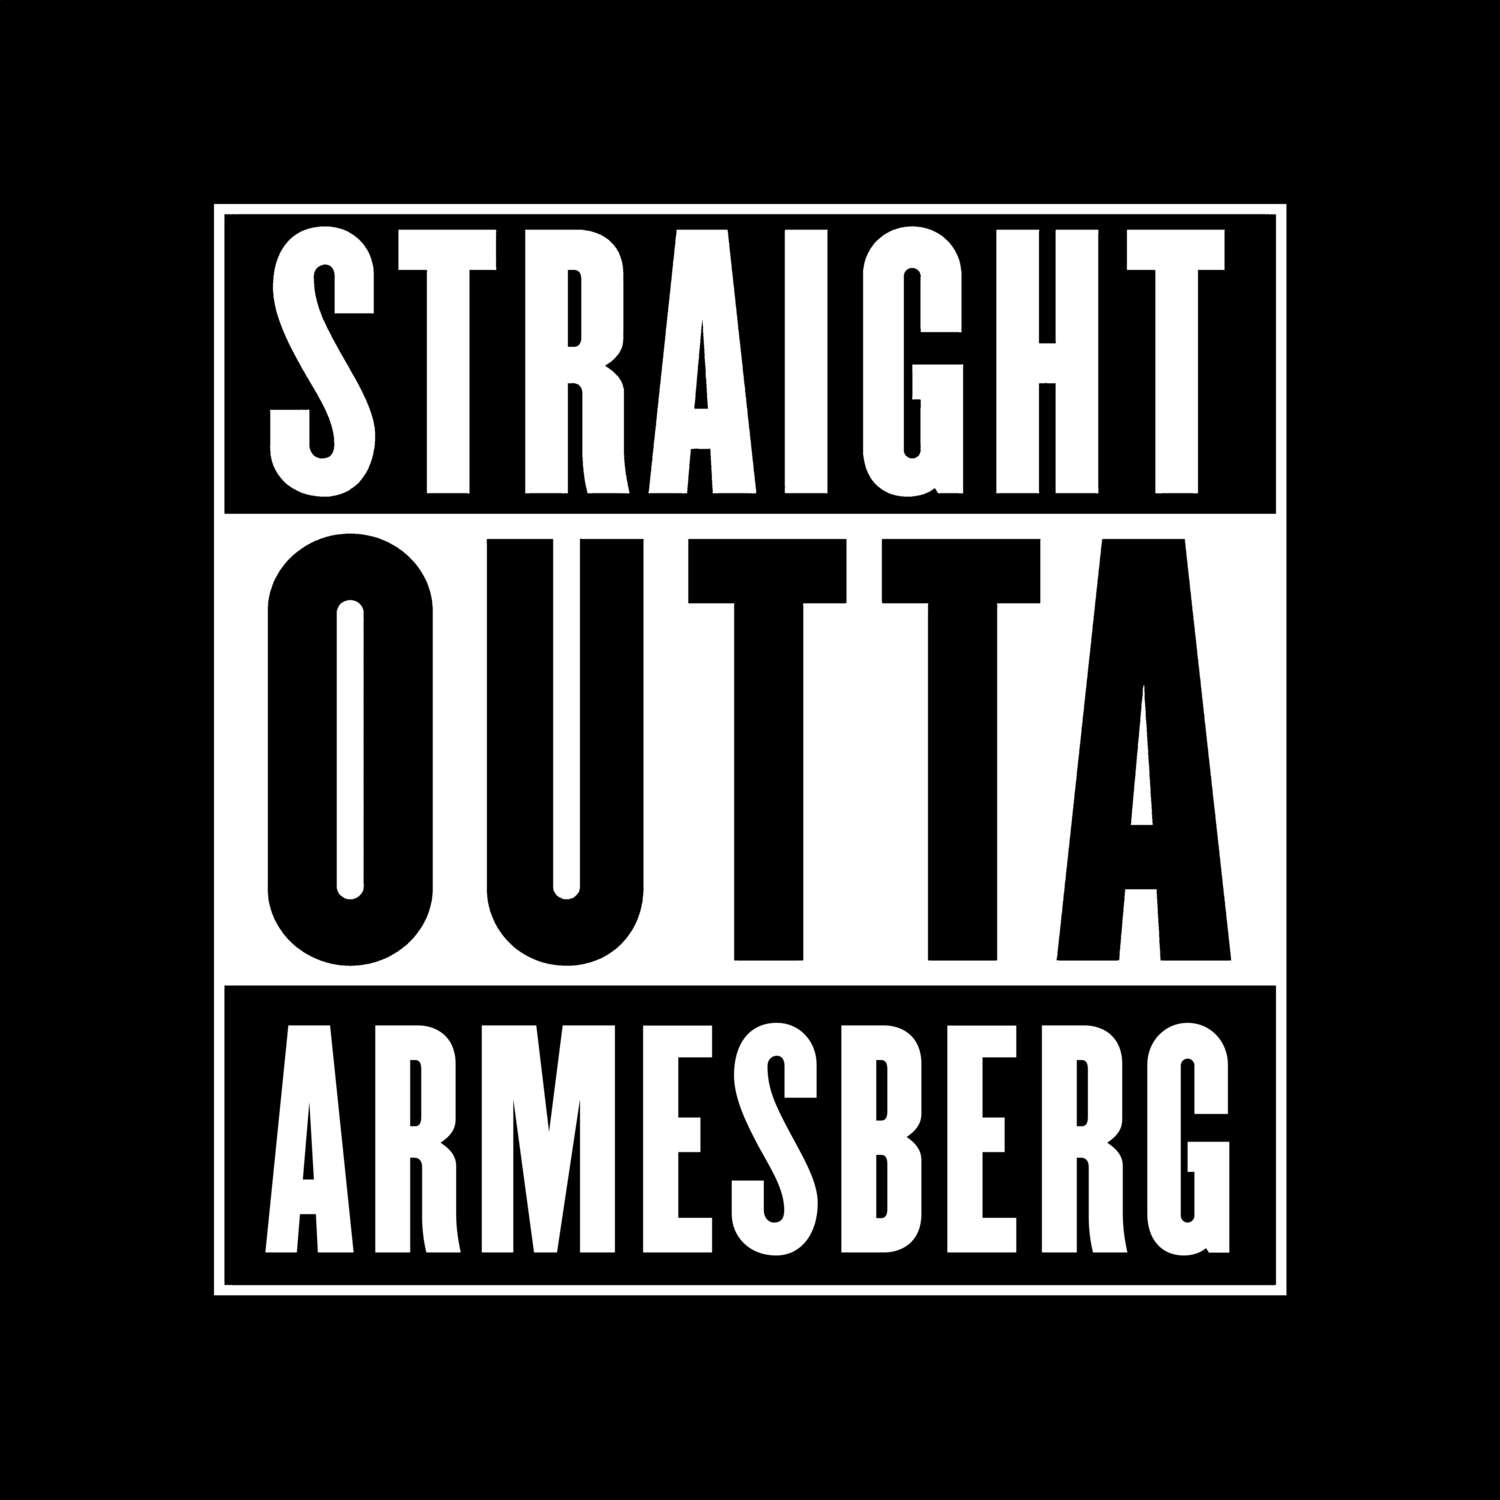 Armesberg T-Shirt »Straight Outta«